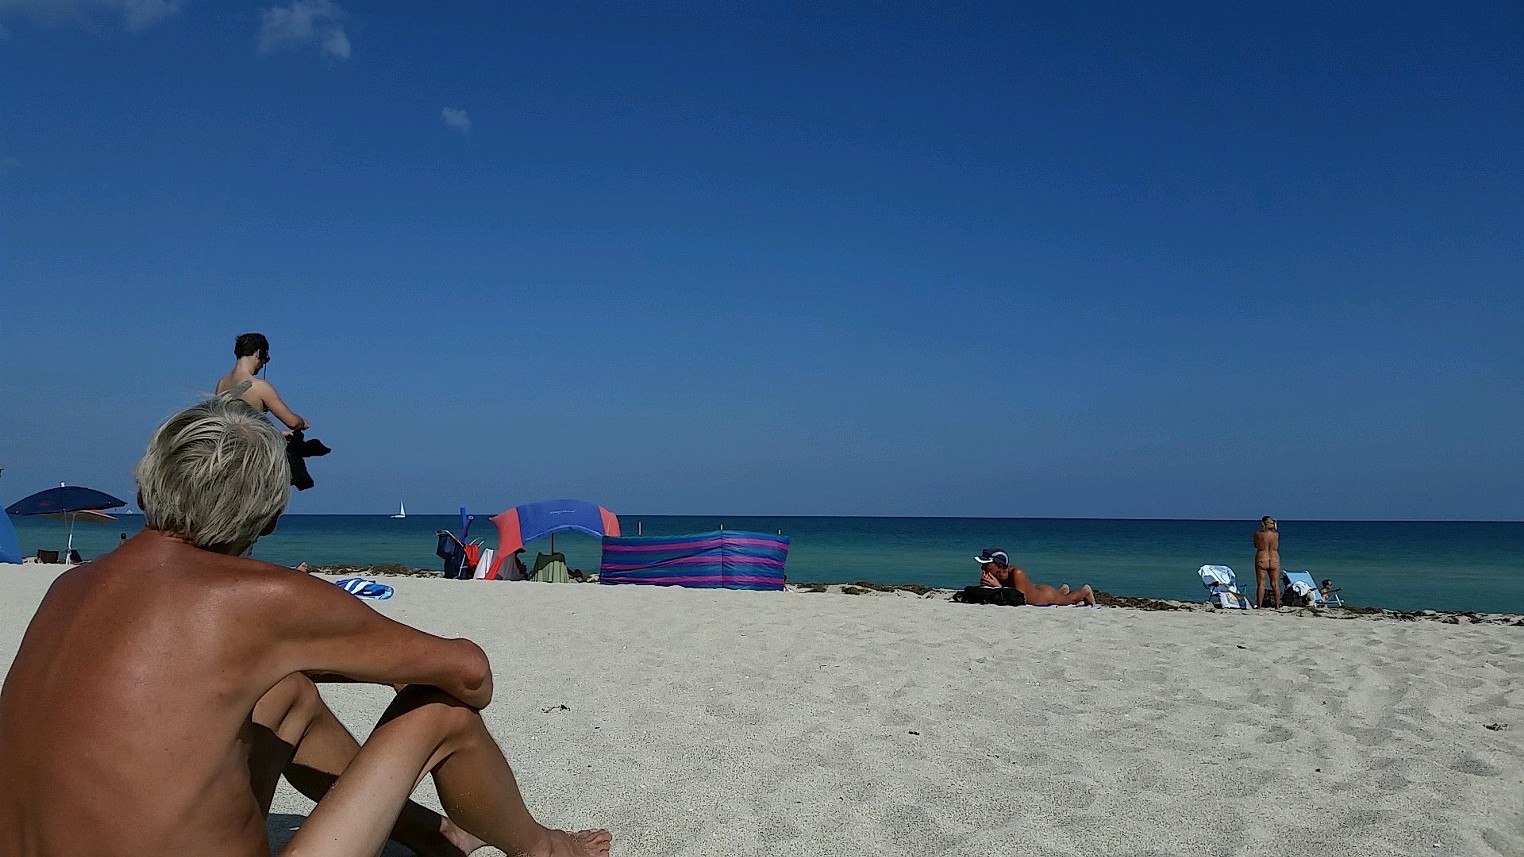 david lingerfelt recommends haulover nudist beach miami pic